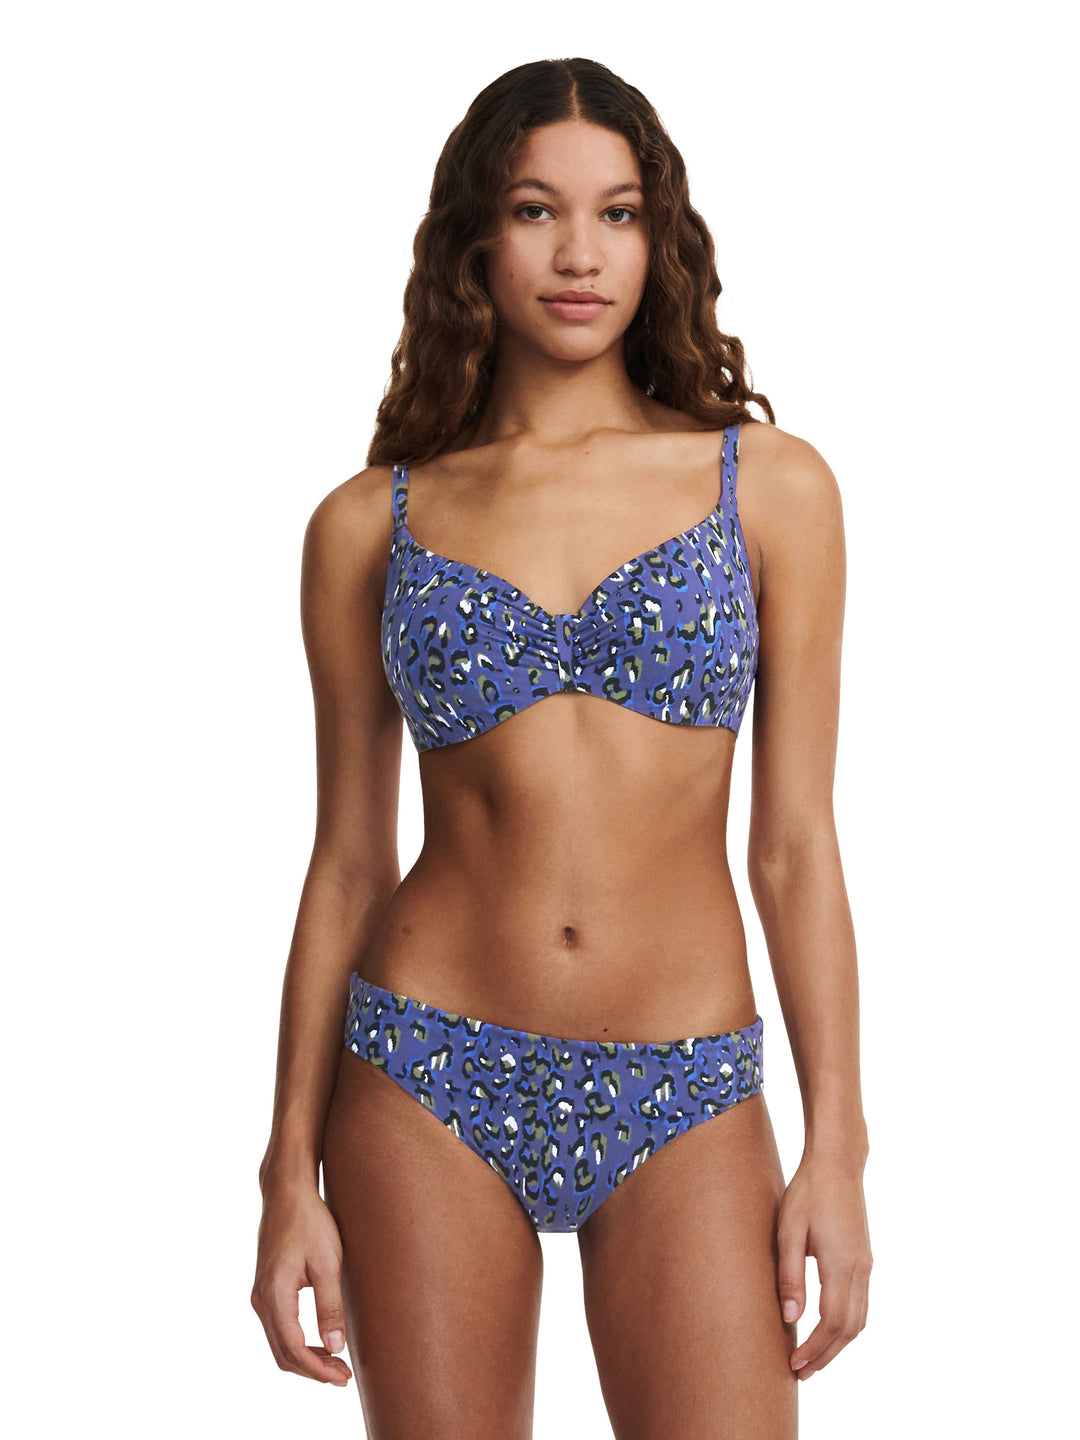 Chantelle Swimwear Eos Покрывающий бюстгальтер на косточках - синий леопардовый бикини с полной чашкой Chantelle